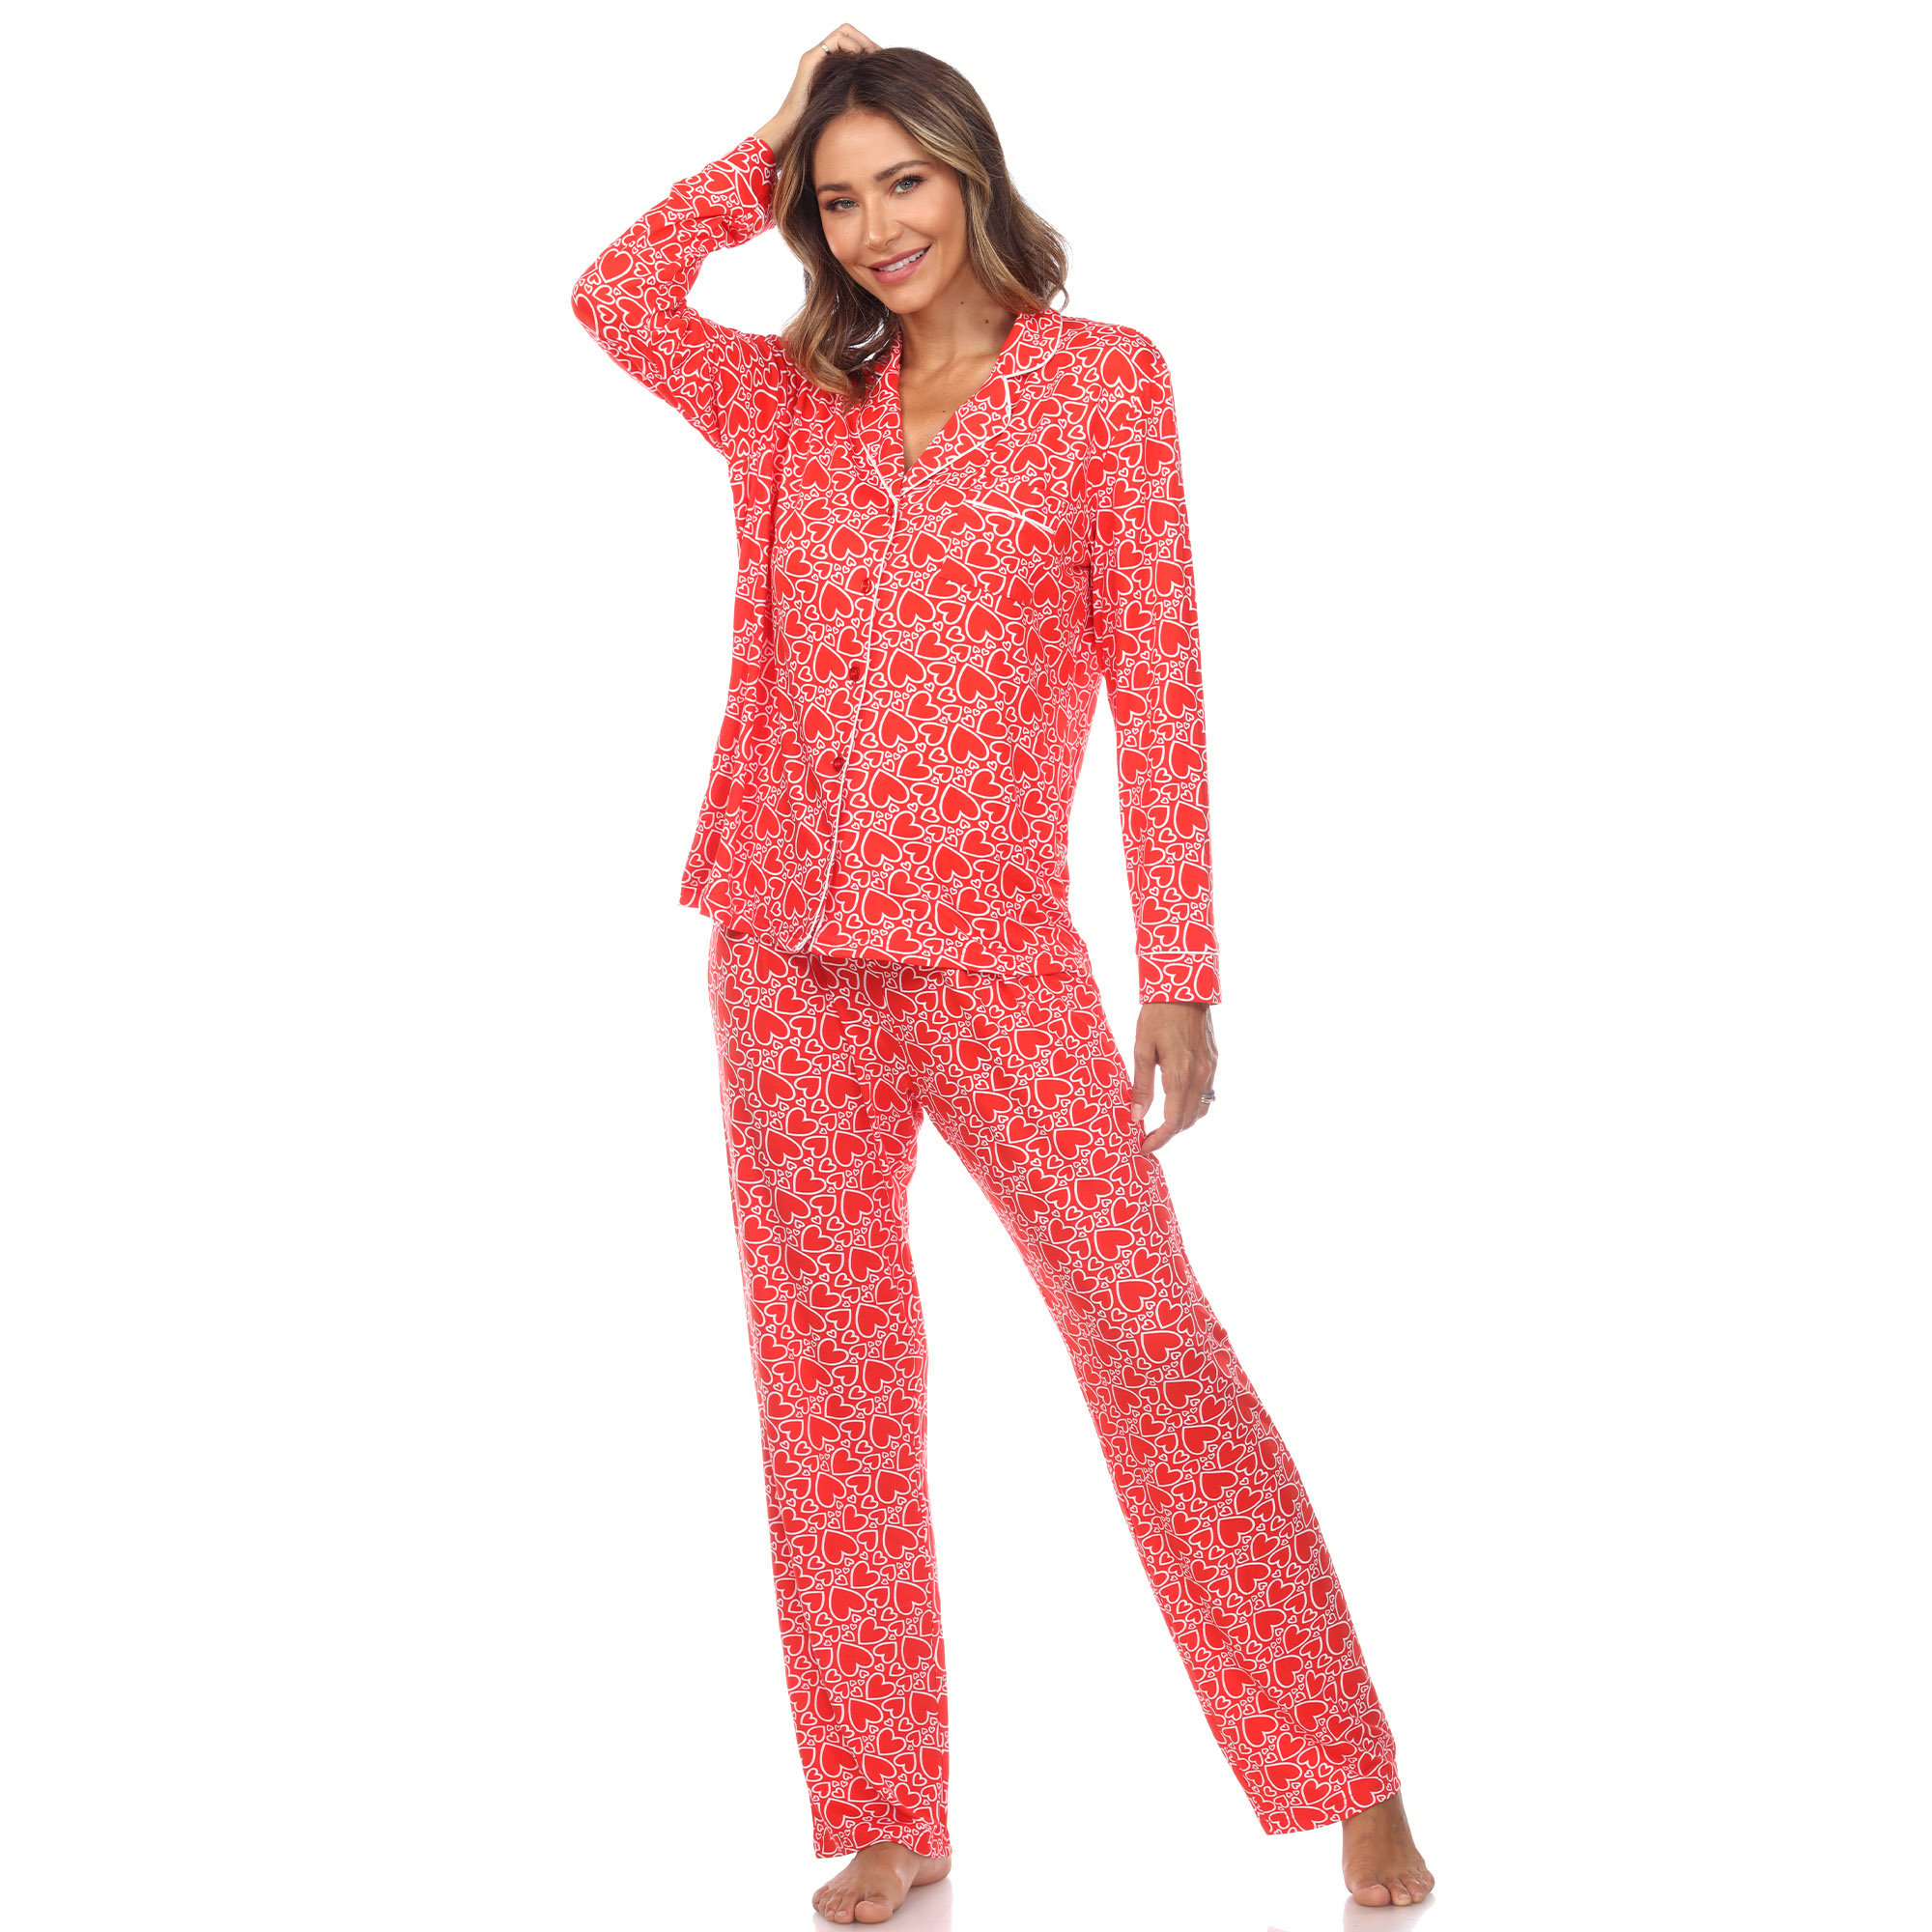 White Mark Women's Long Sleeve Hearts Pajama Set - Red, Small